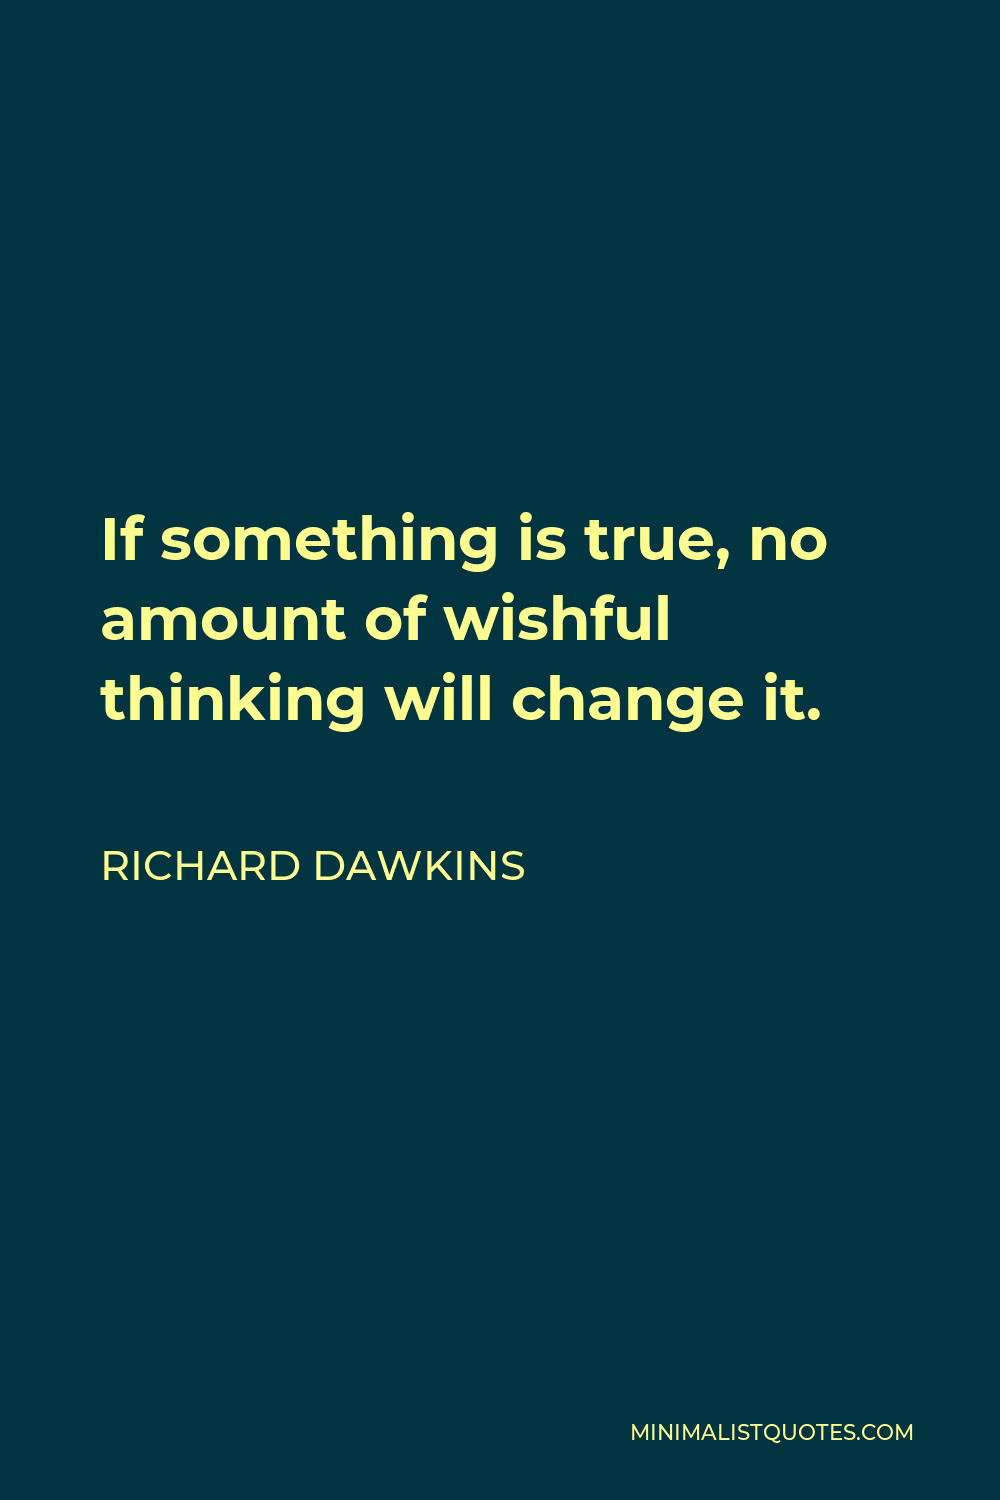 Richard Dawkins Quote - If something is true, no amount of wishful thinking will change it.